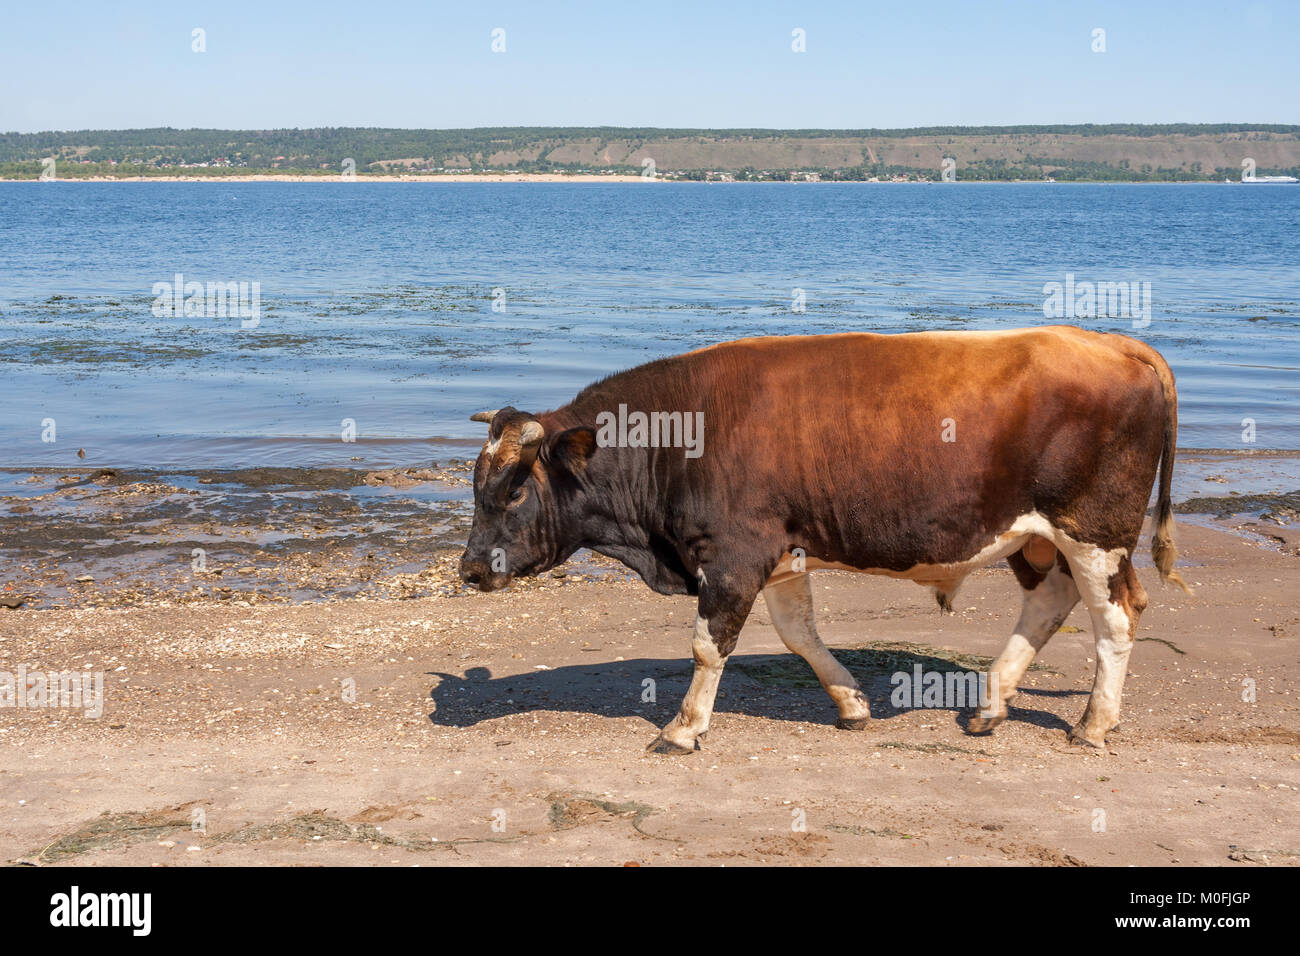 Un big brown bull va sur les rives du fleuve. Banque D'Images